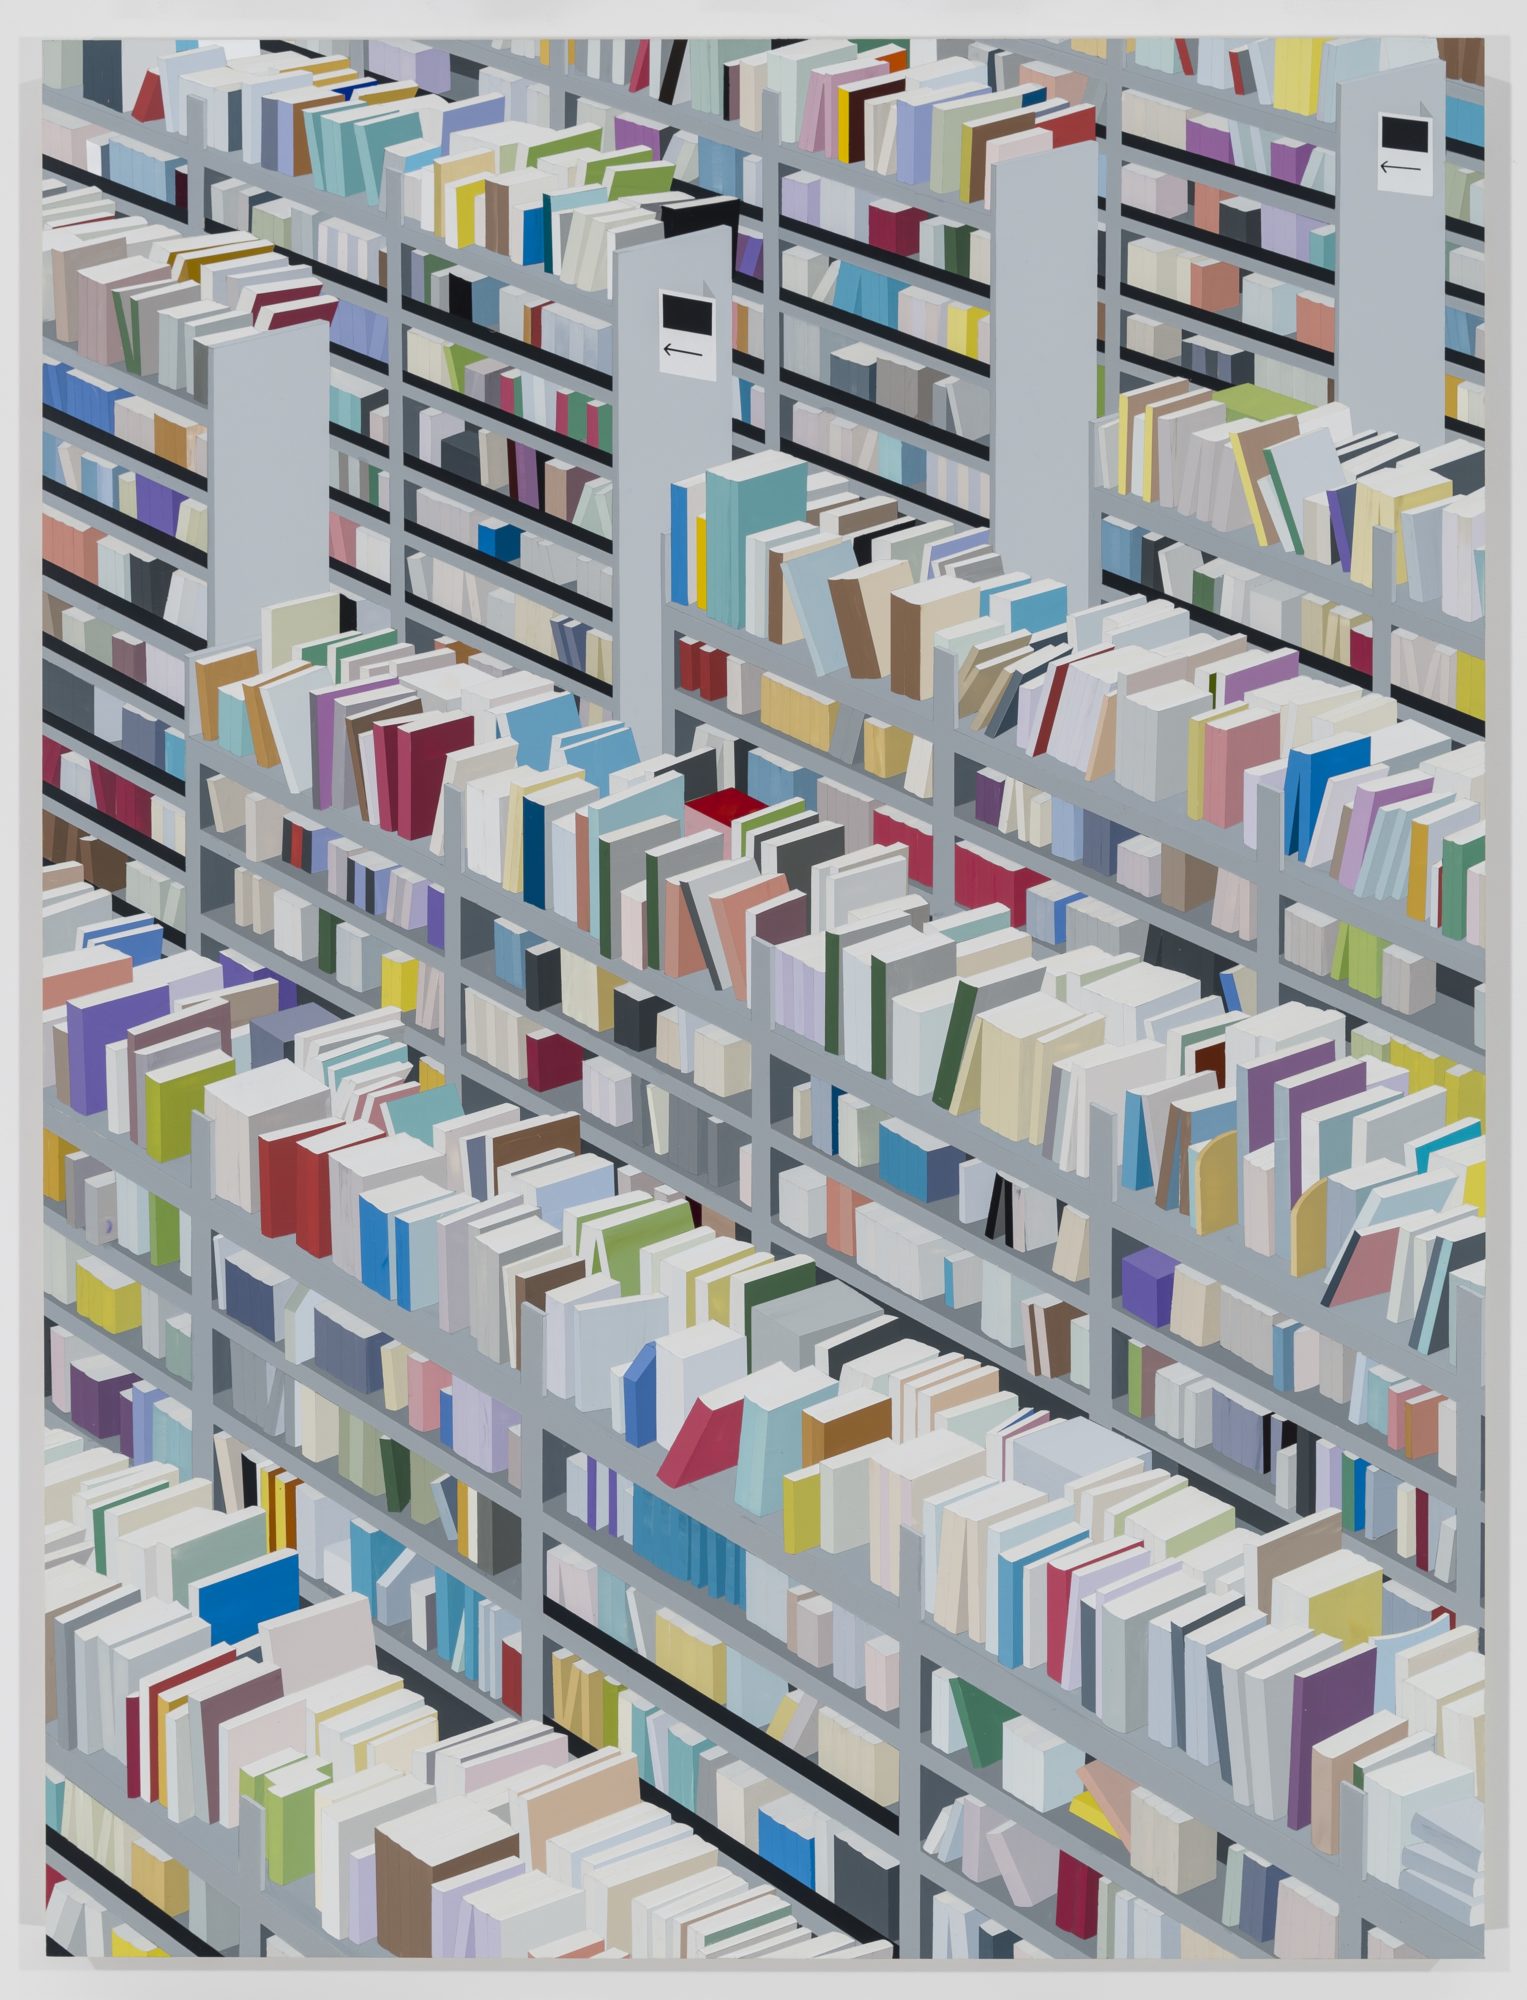 depiction of amazon warehouse full of books